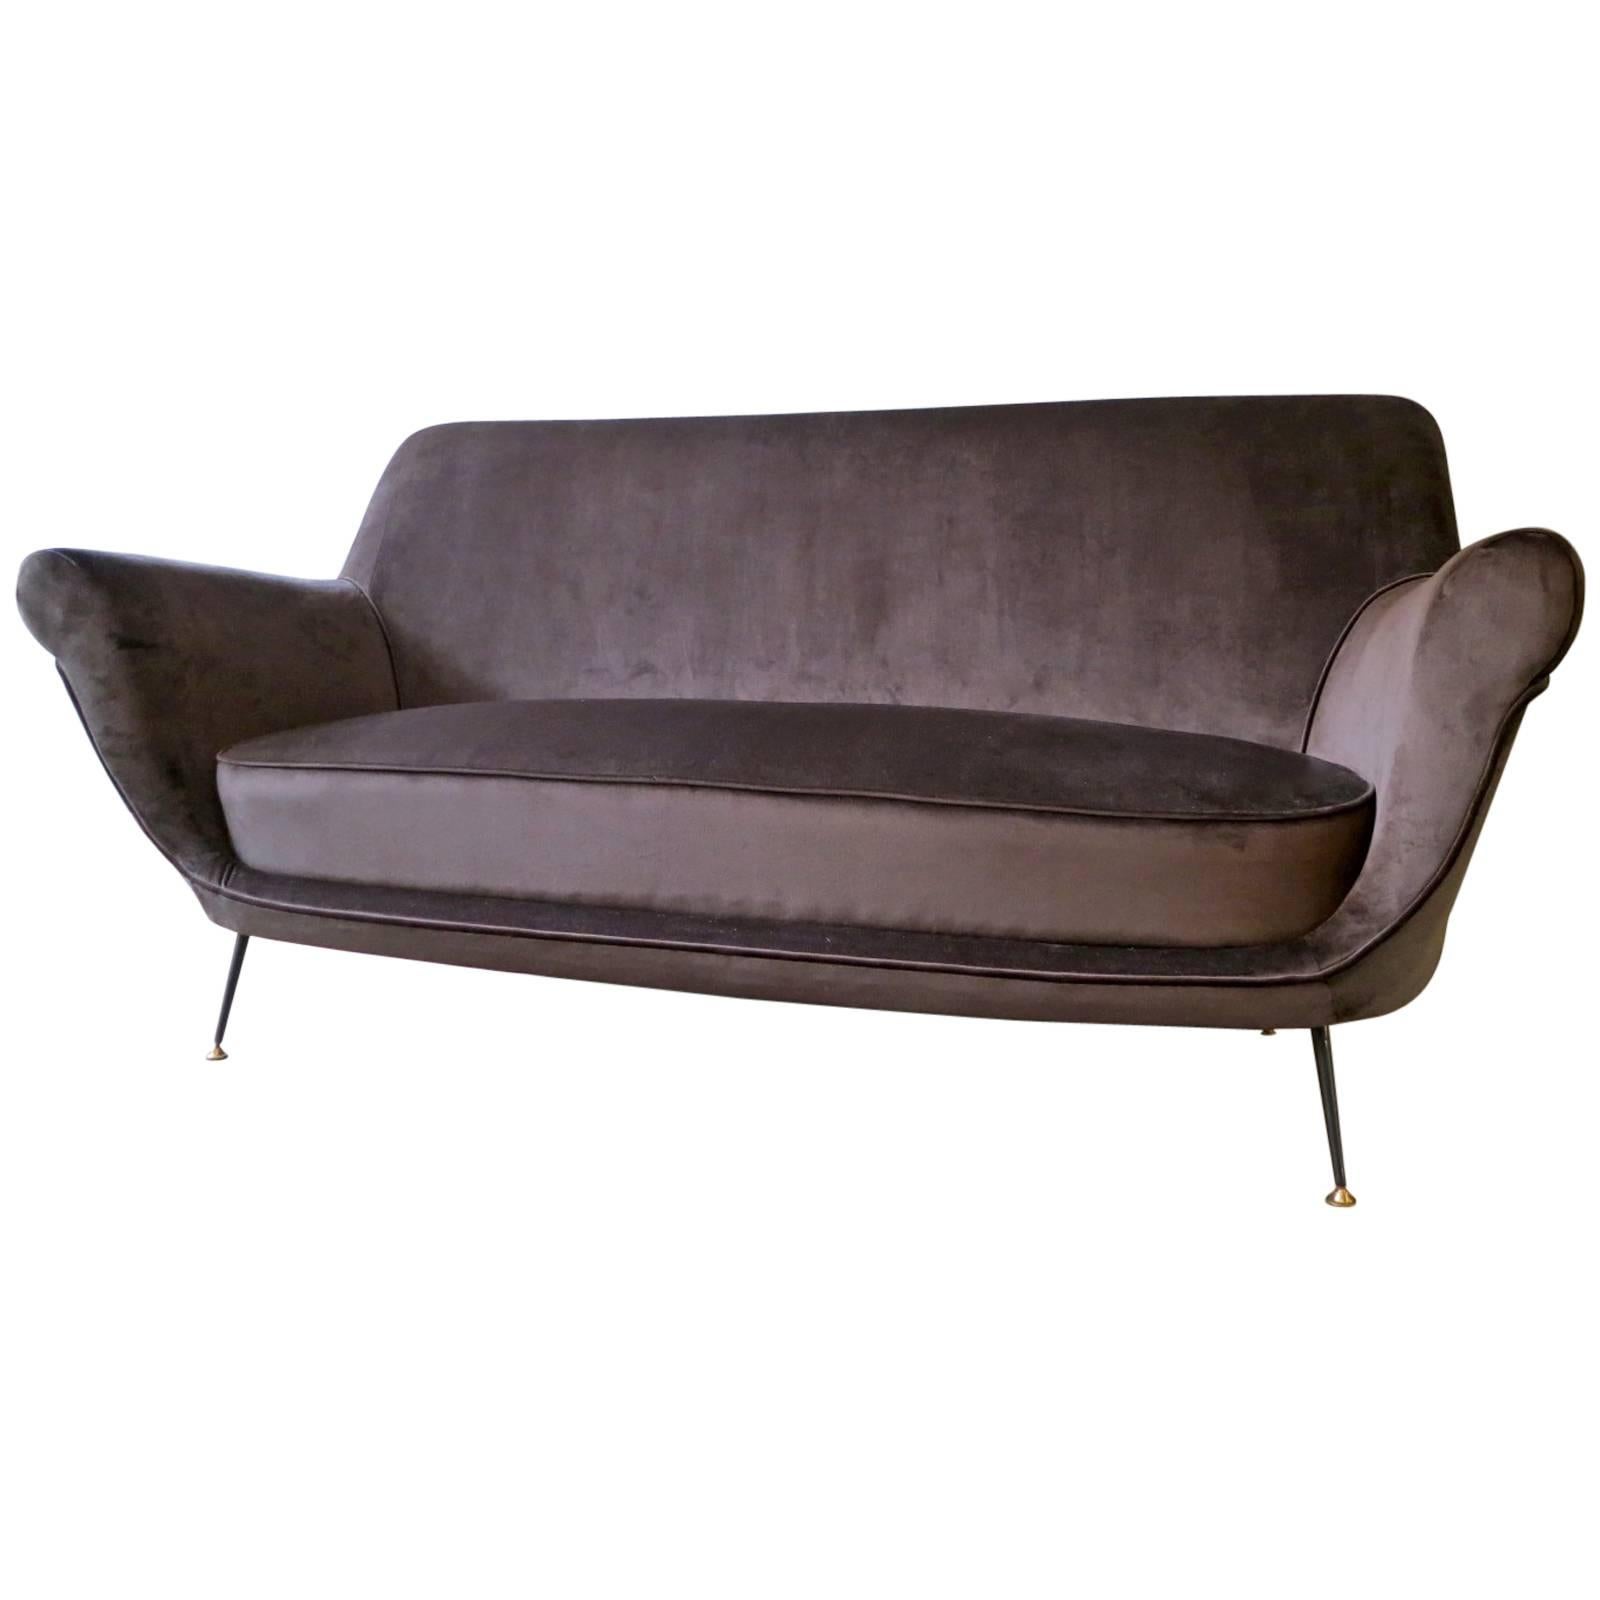 Italian Midcentury Sofa in the Style of Parisi